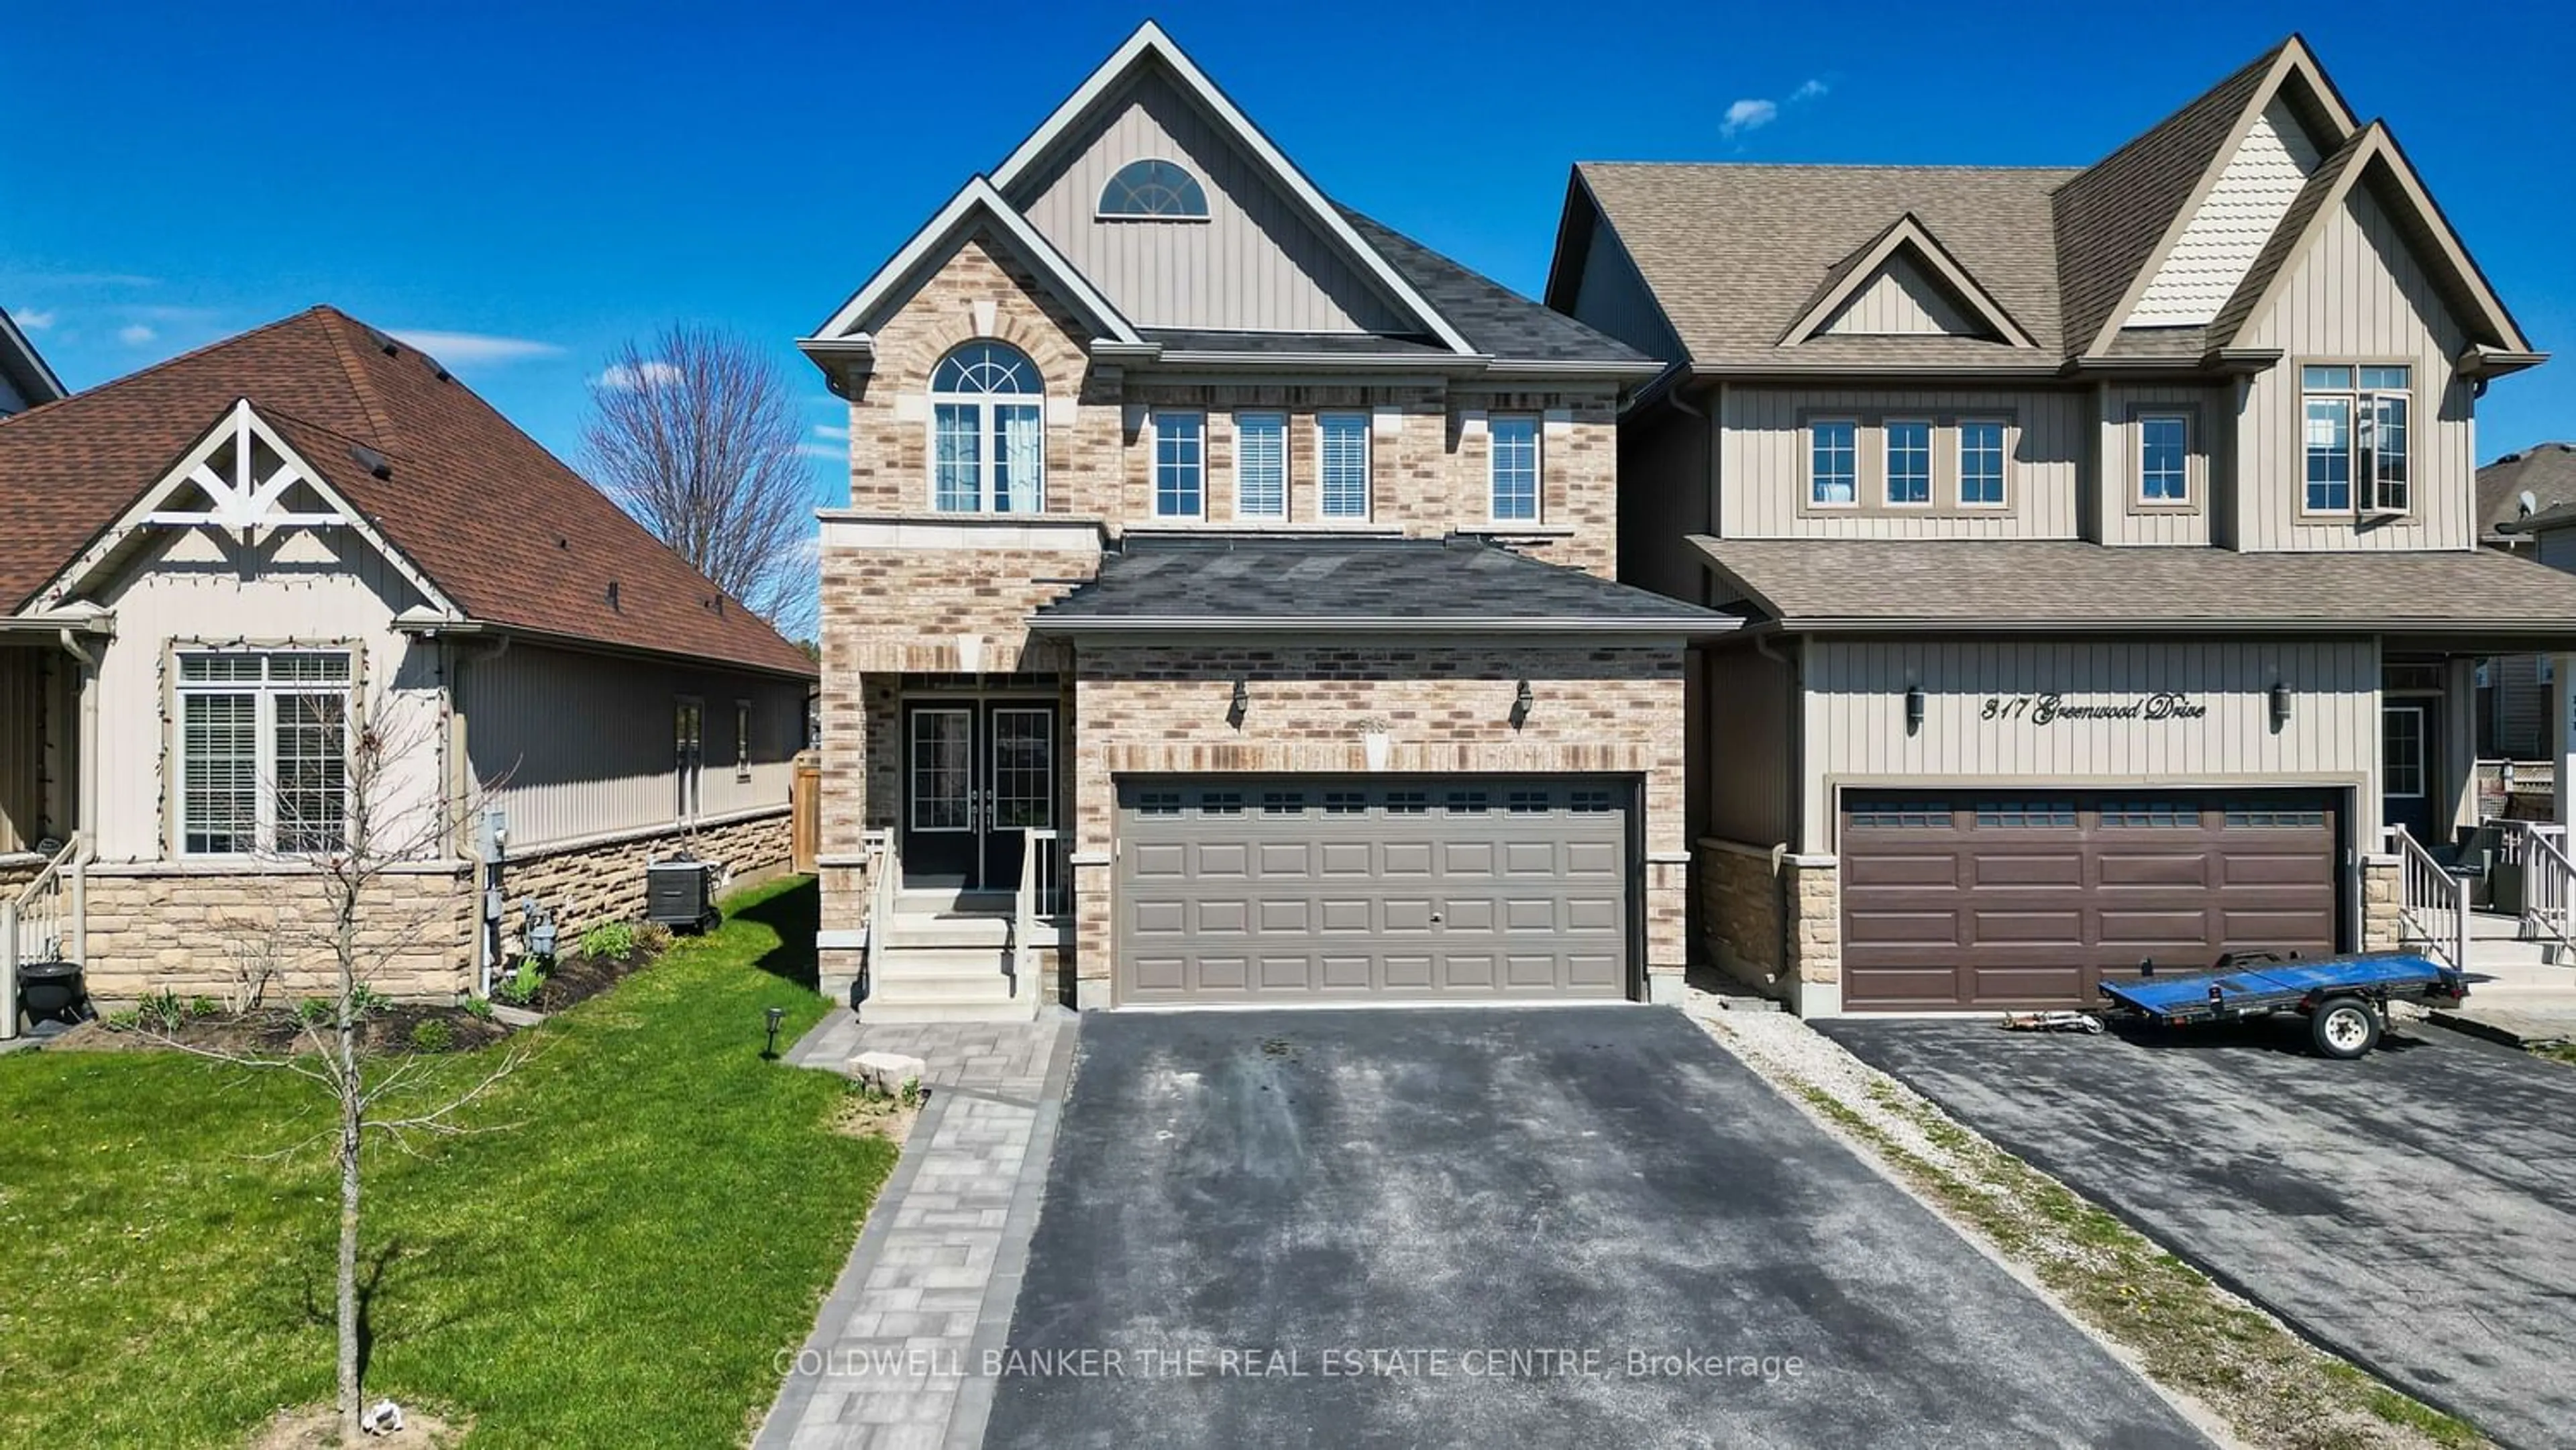 Home with brick exterior material for 315 Greenwood Dr, Essa Ontario L3W 0E8